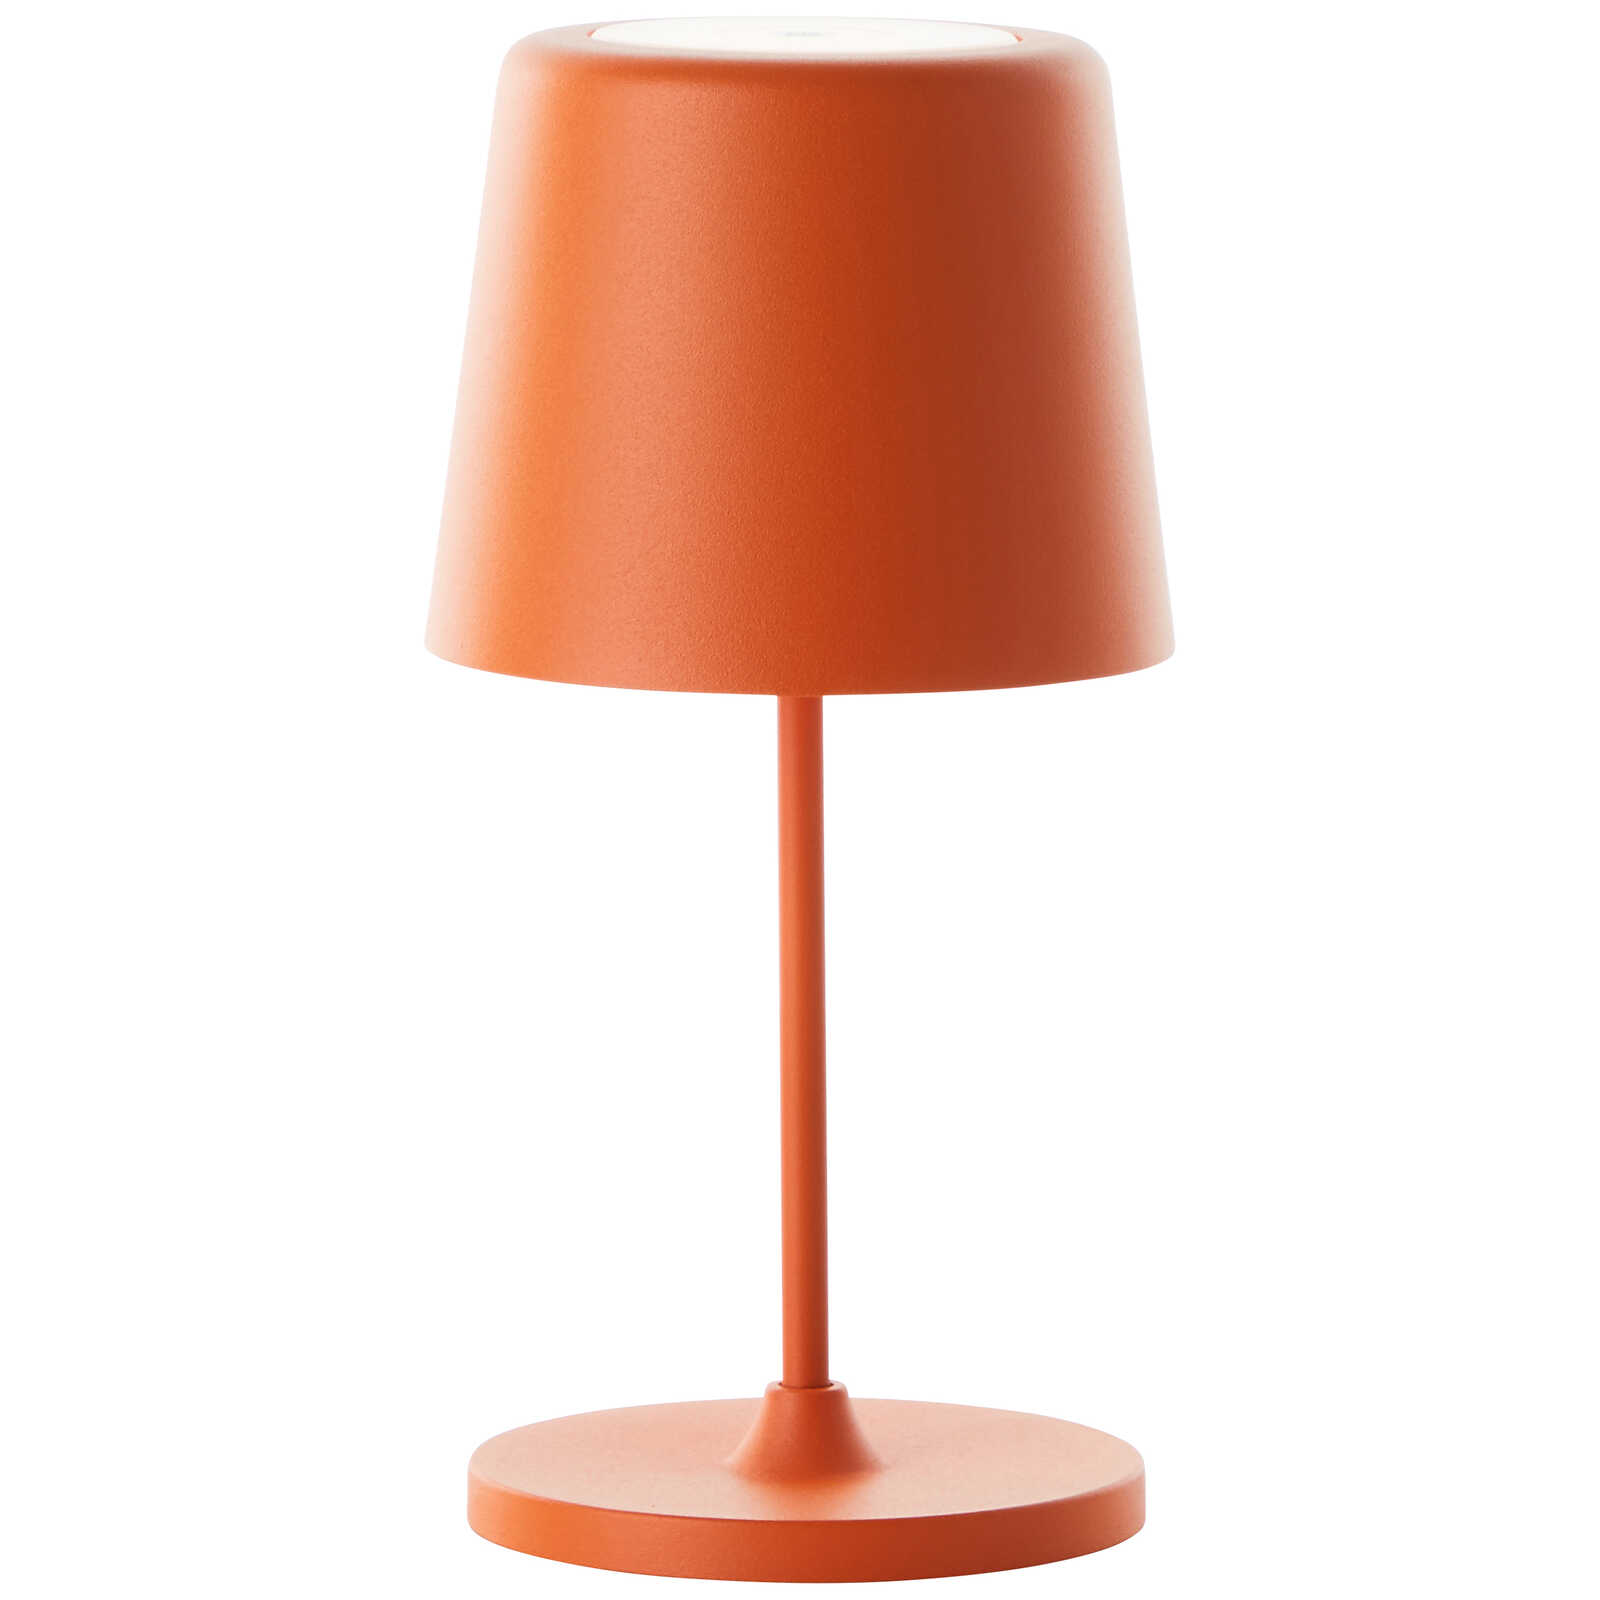             Metal table lamp - Cosy 7 - Orange
        